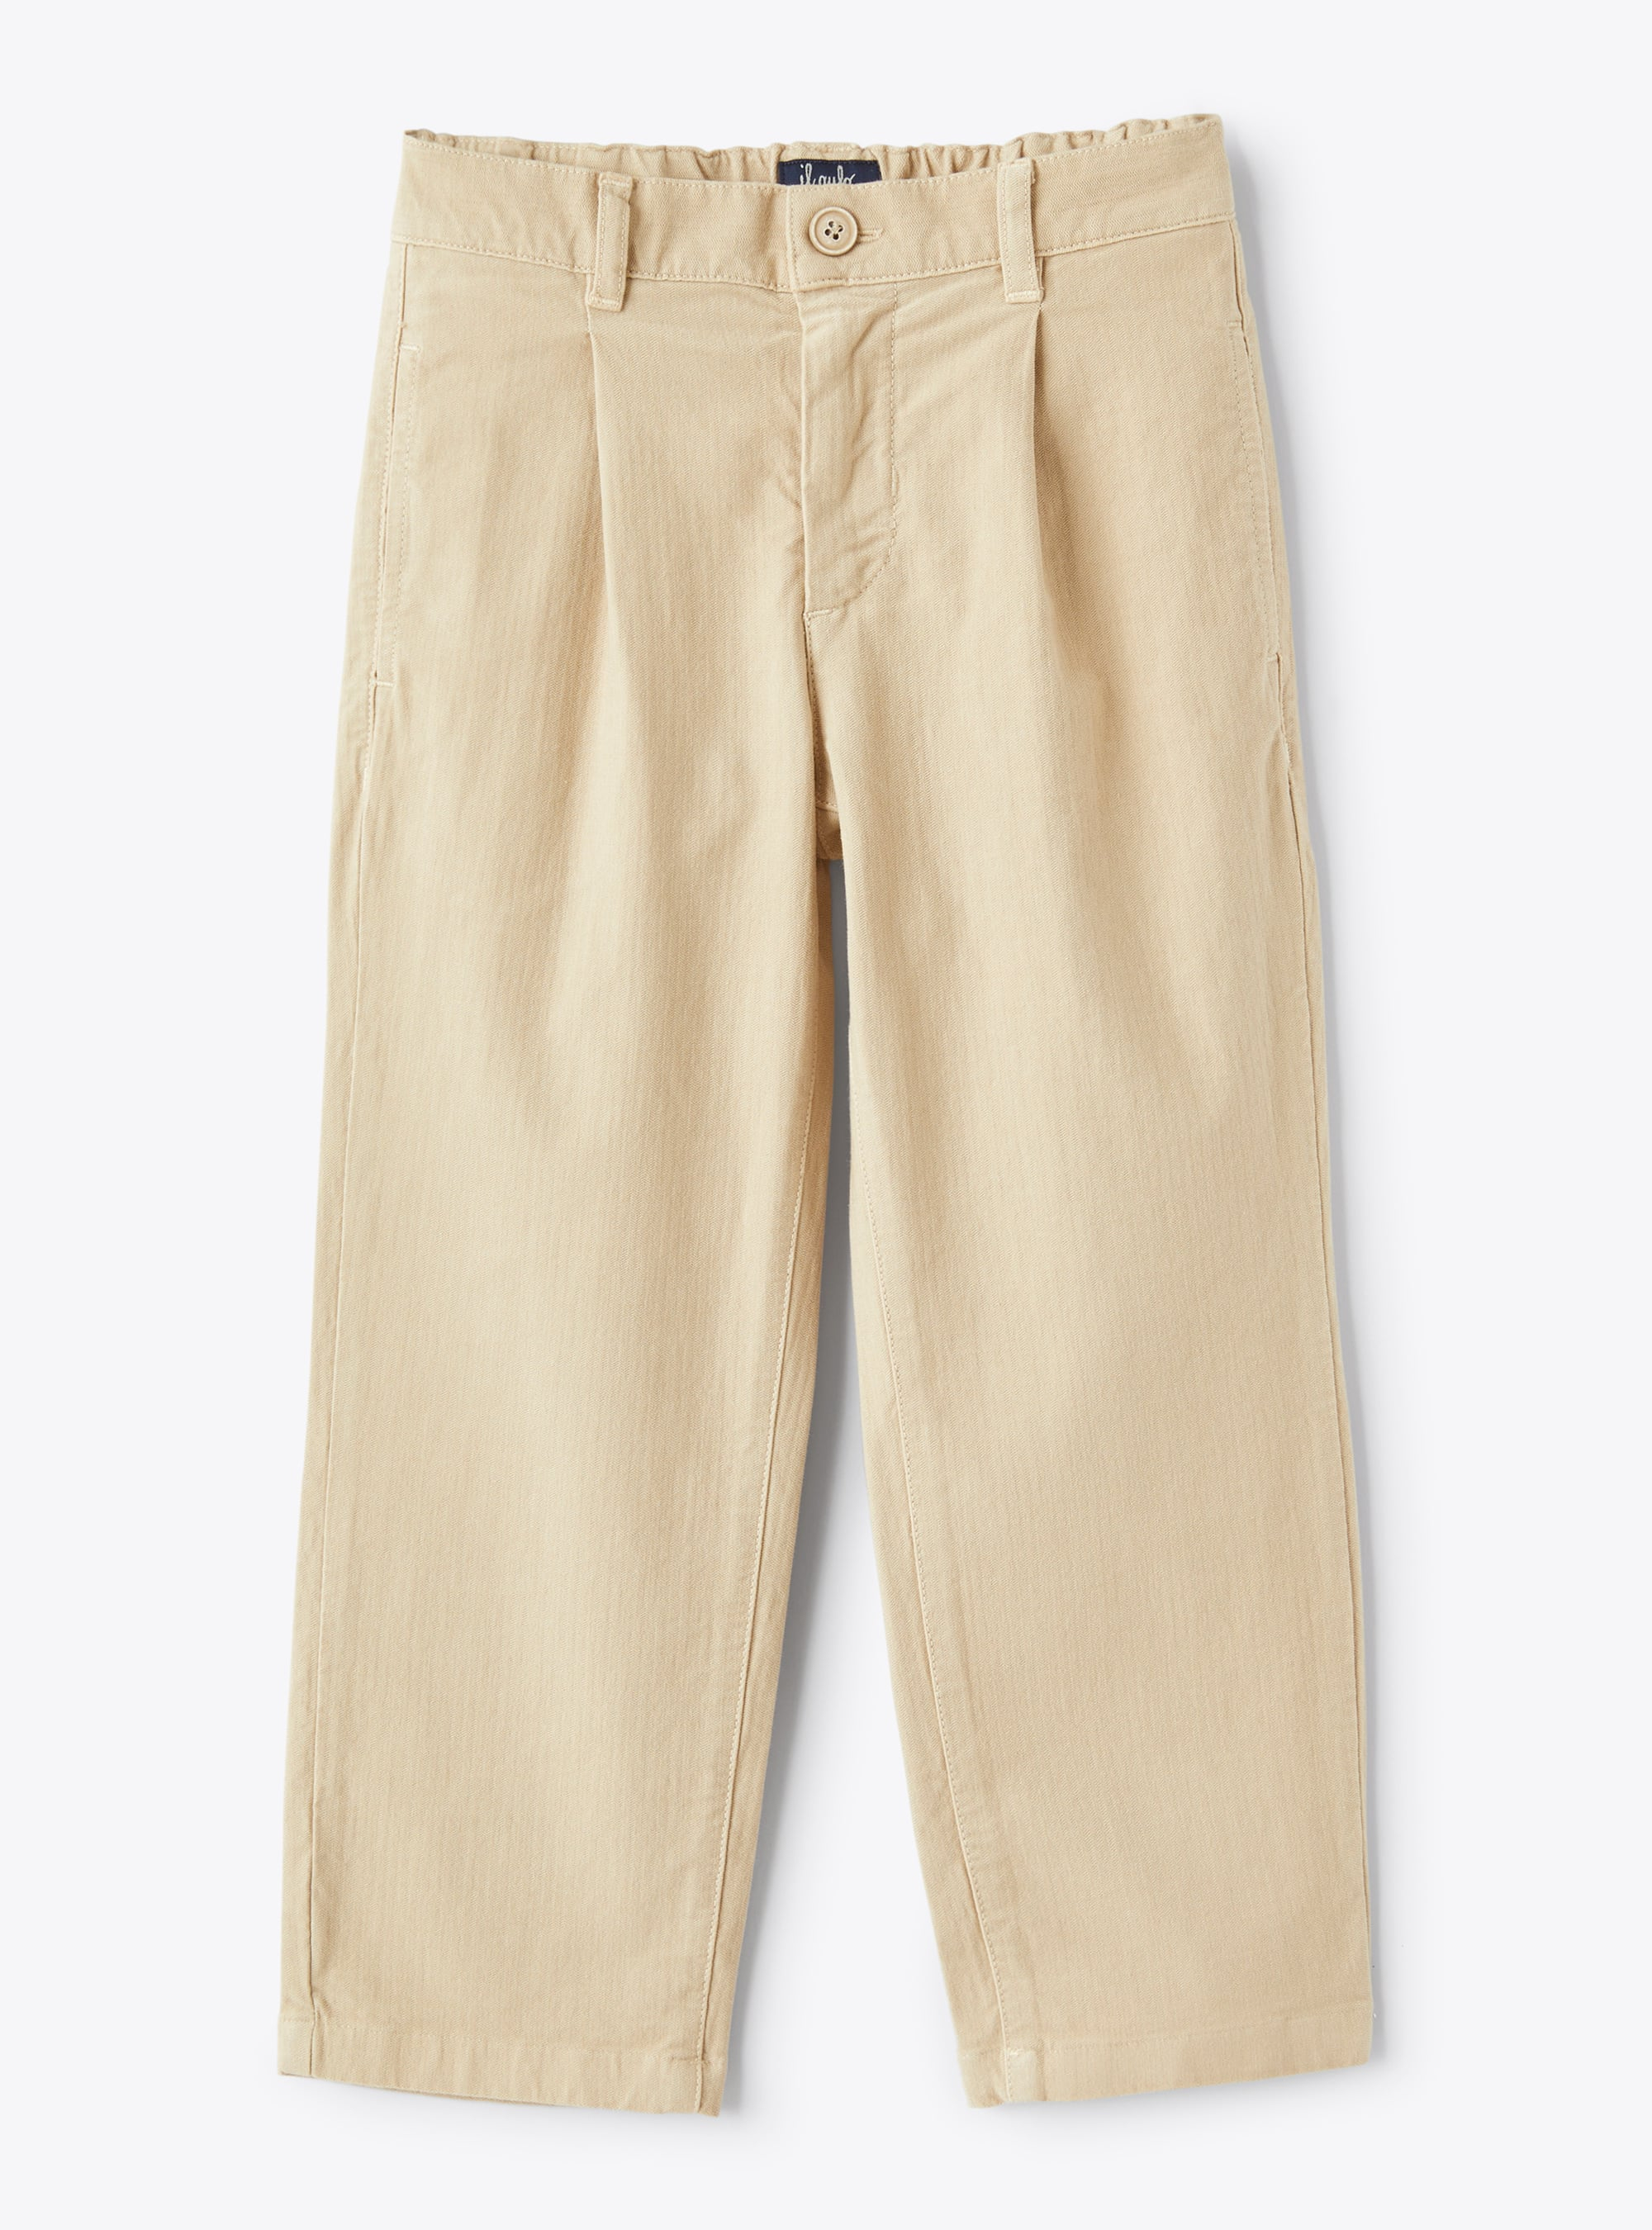 Longline trousers in herringbone-patterned stretch cotton - Trousers - Il Gufo